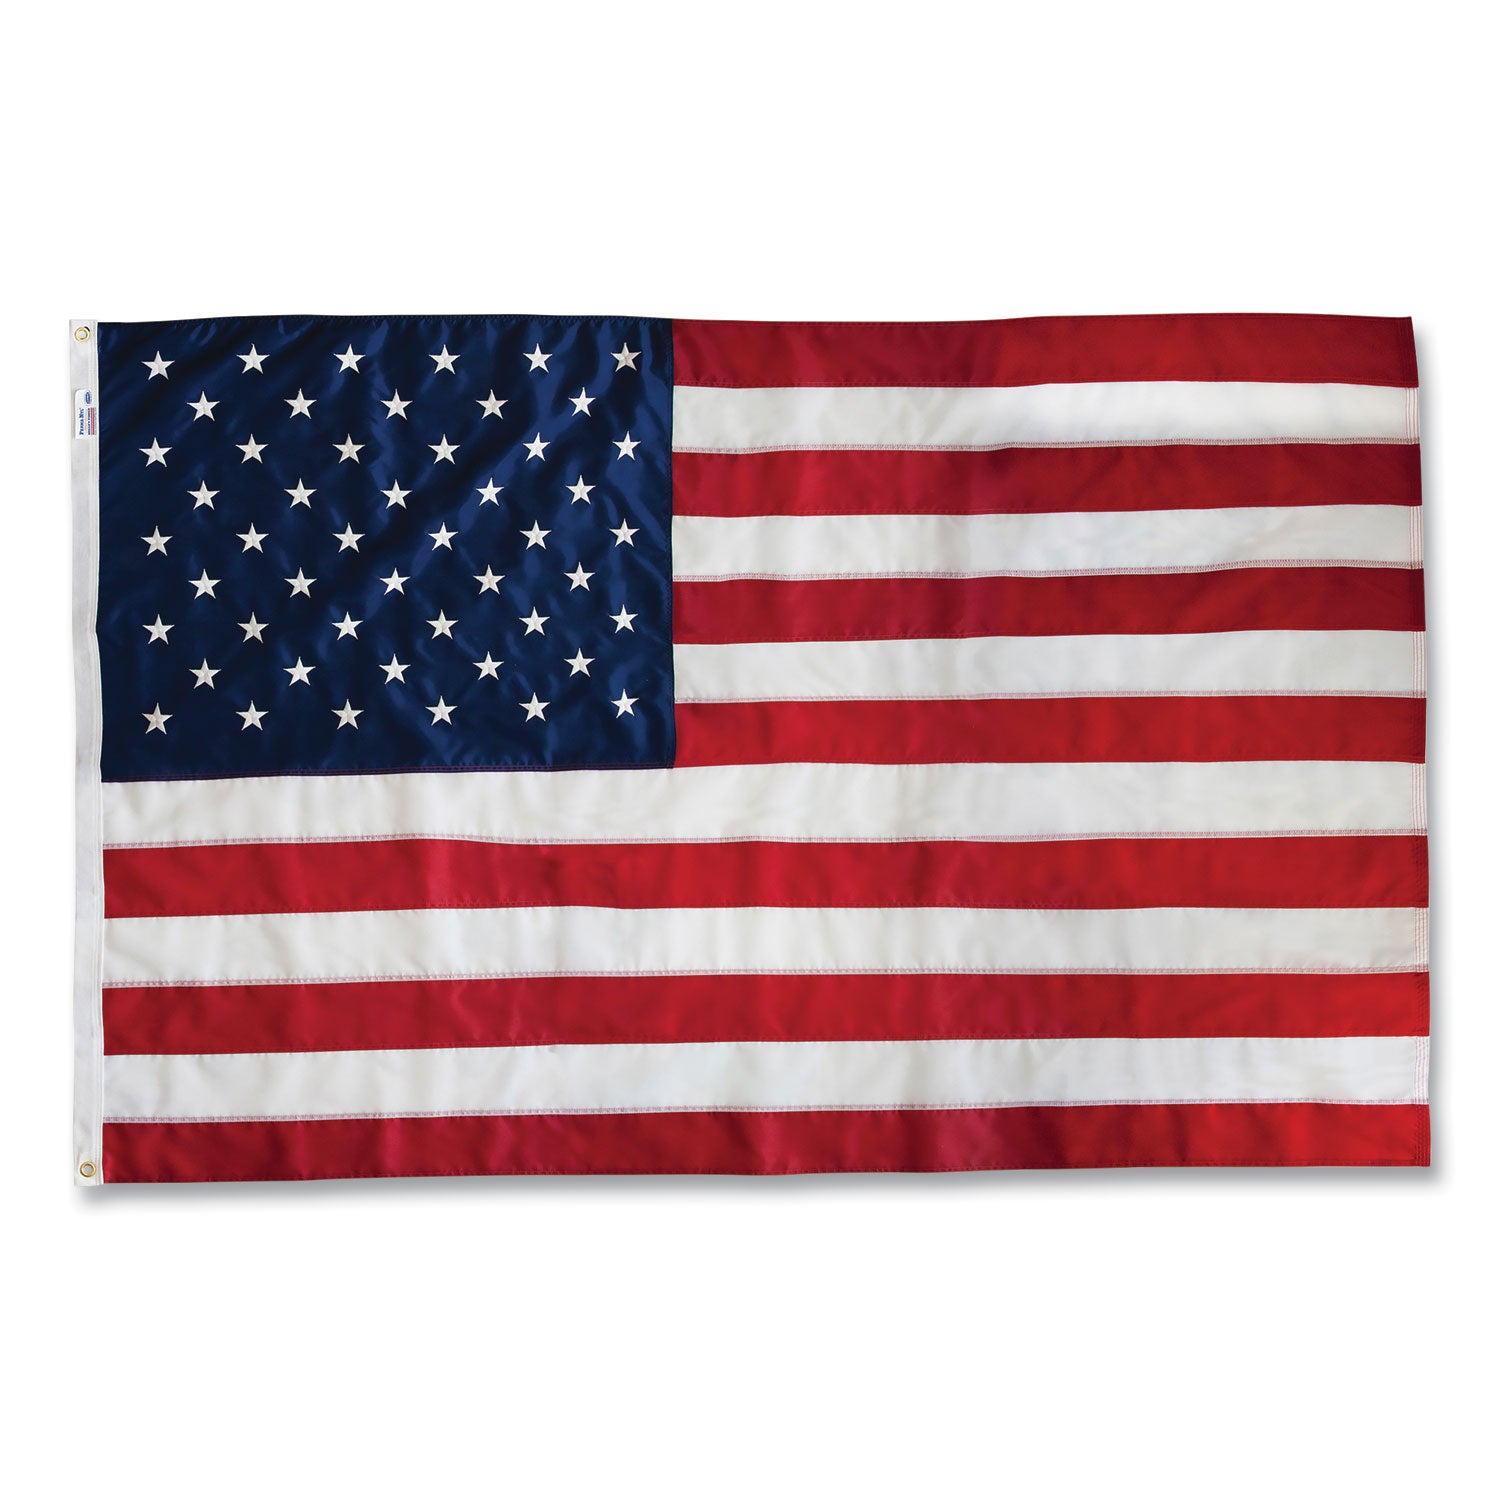 All-Weather Outdoor U.S. Flag, 72" x 48", Heavyweight Nylon - 